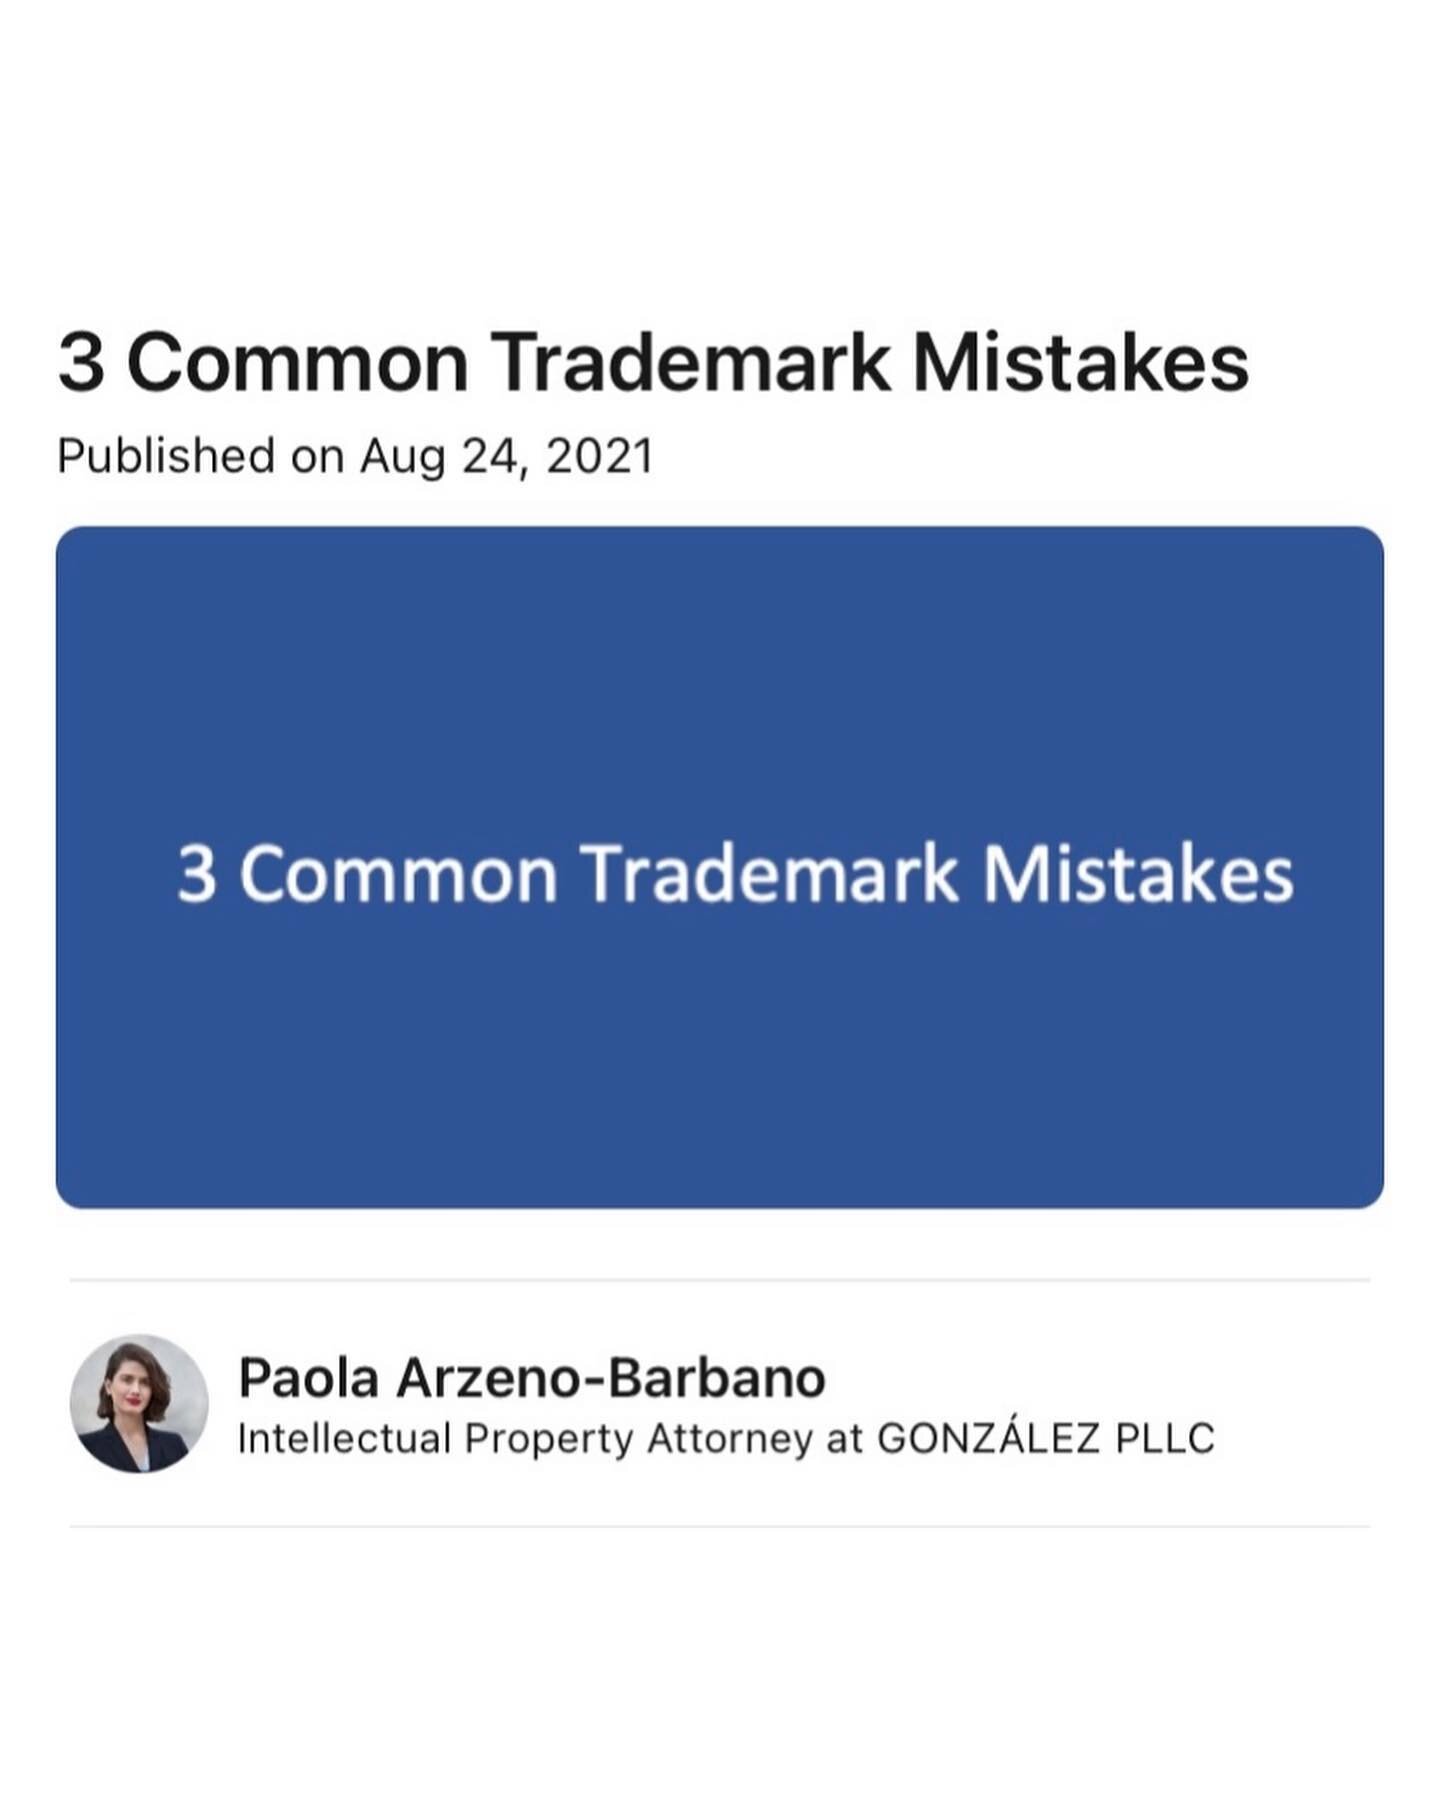 Source: https://www.linkedin.com/posts/psarzeno_3-common-trademark-mistakes-activity-6836052235445772288-MKAs